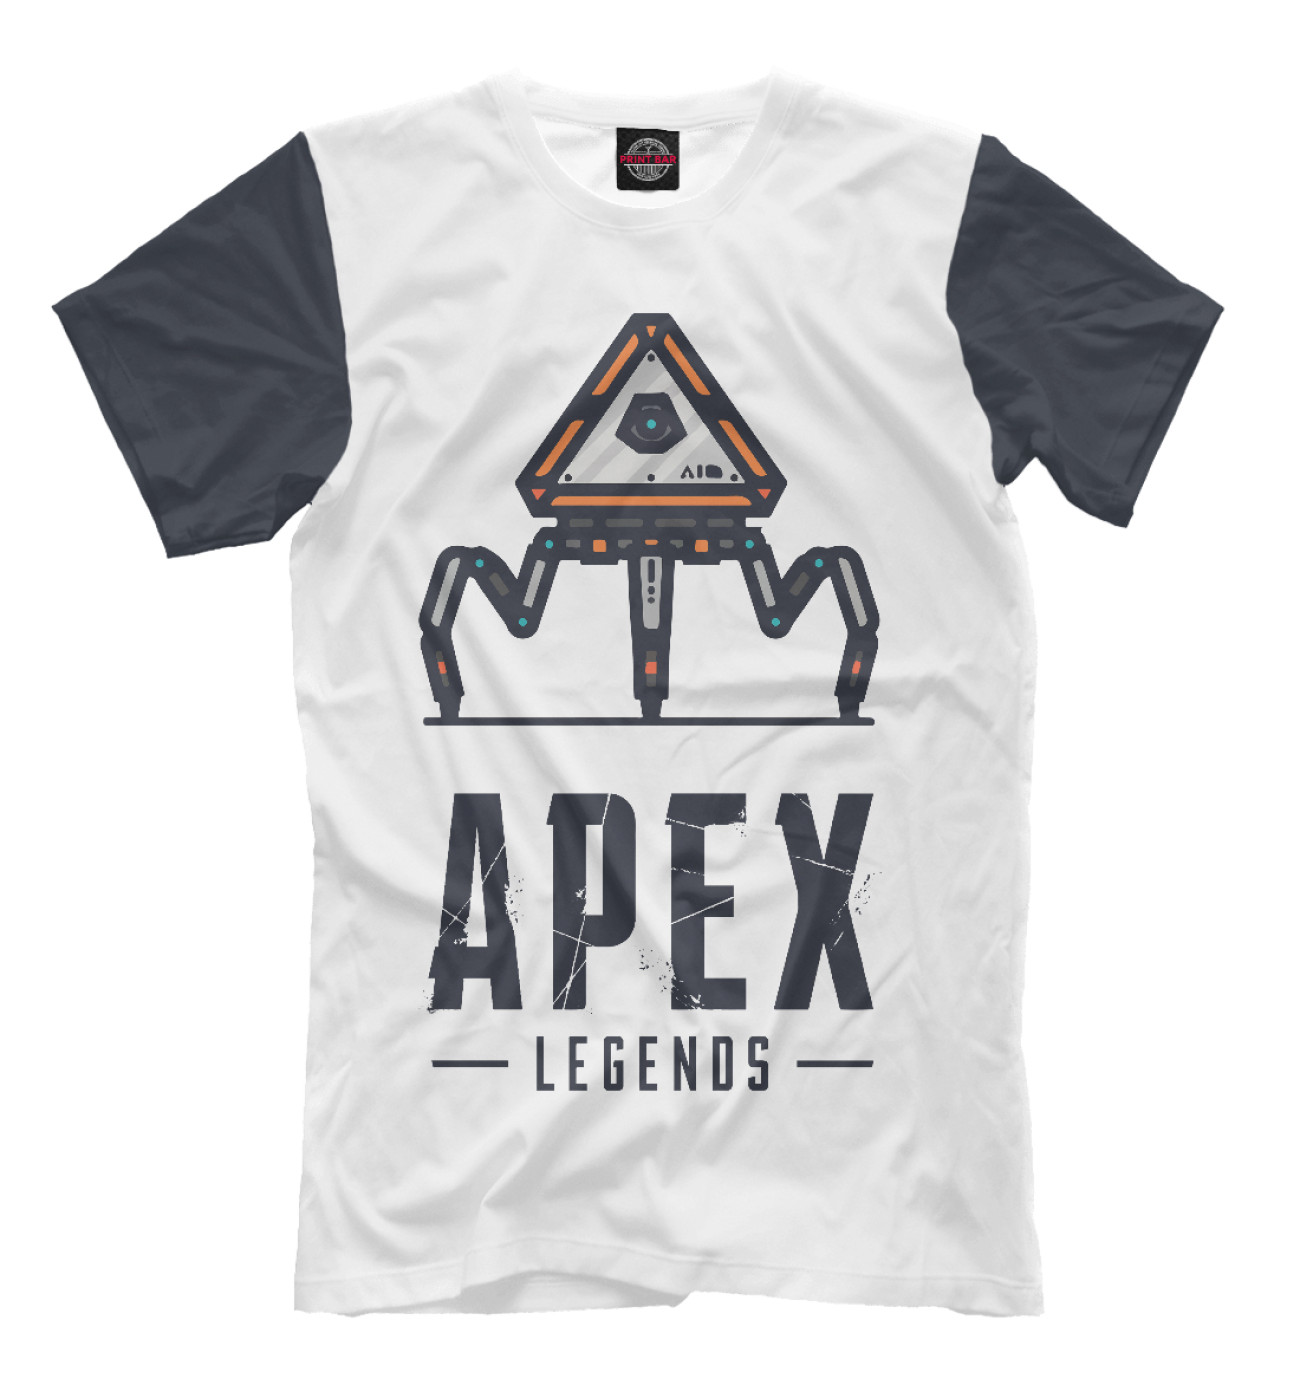 Мужская Футболка Apex legends drone, артикул: APX-576967-fut-2